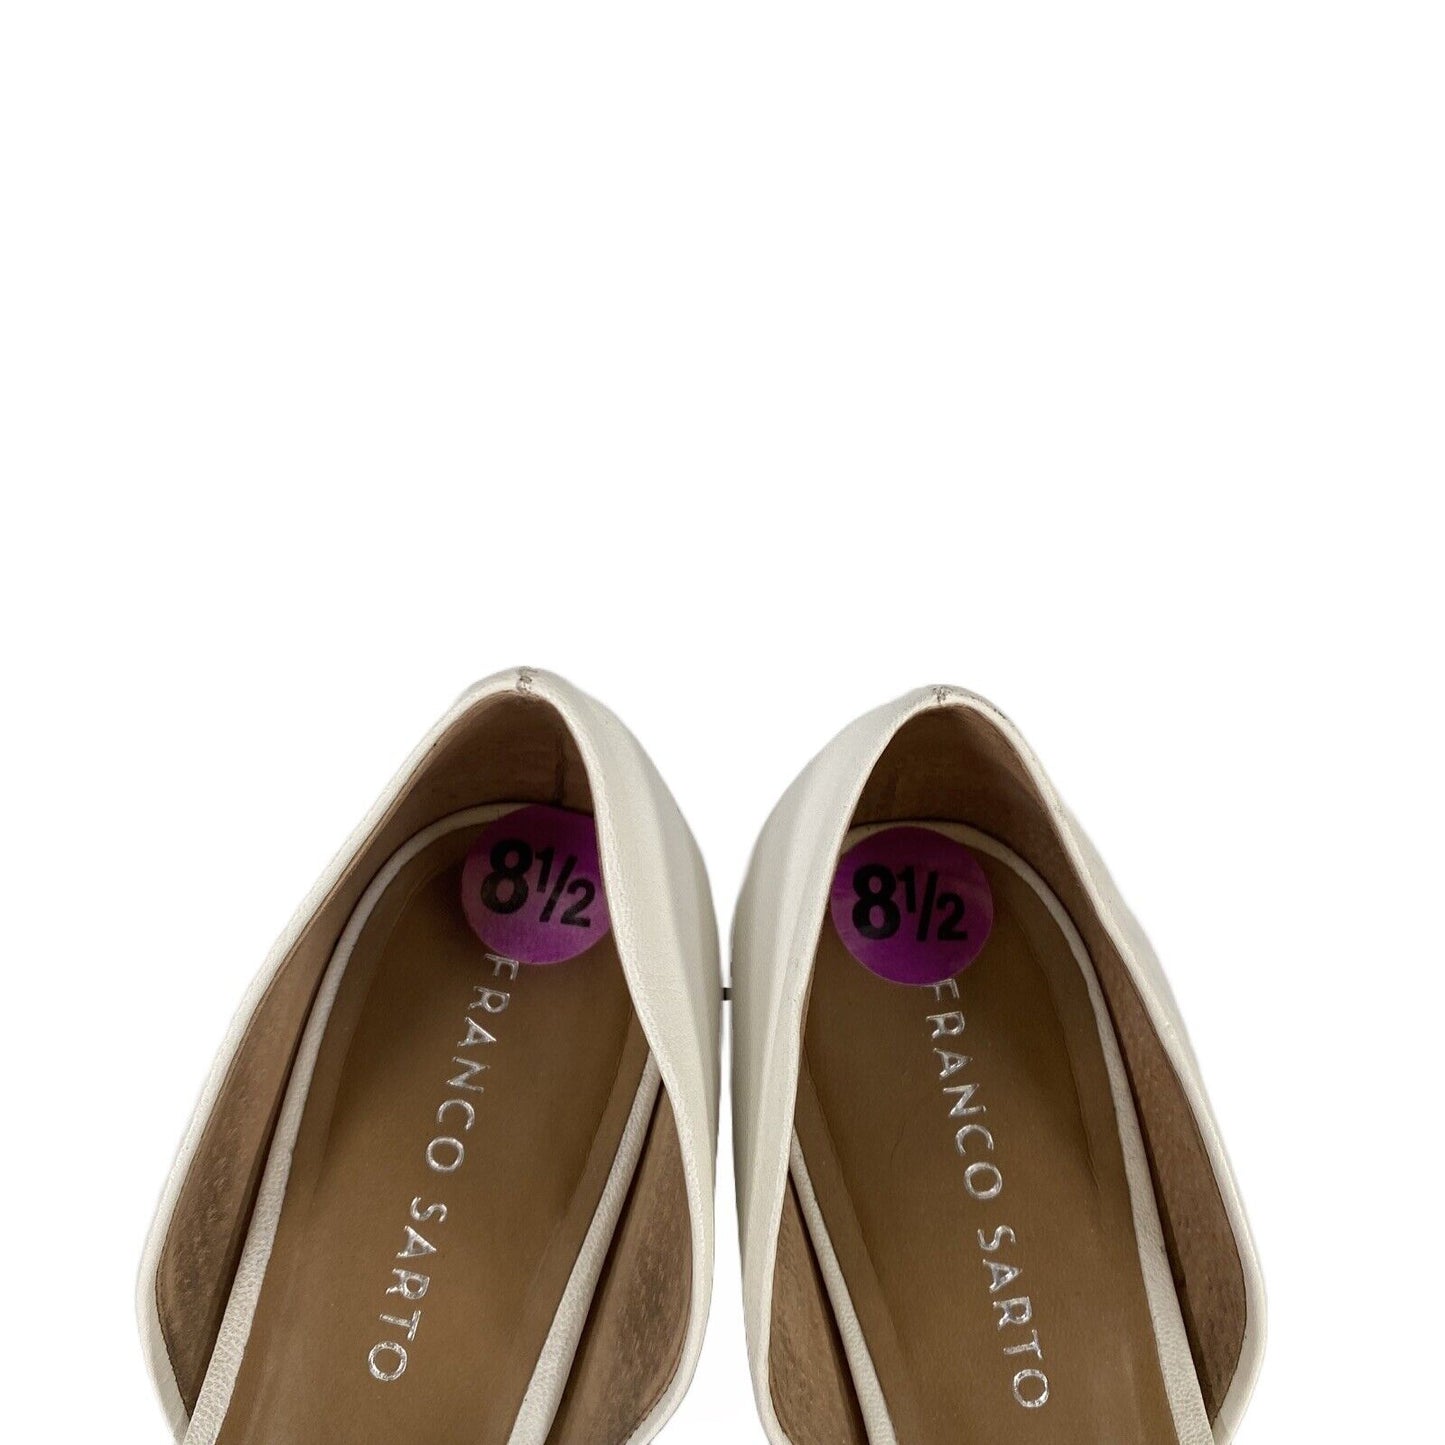 Franco Sarto Women's White Leather Aspire Strappy Flat Sandals - 8.5